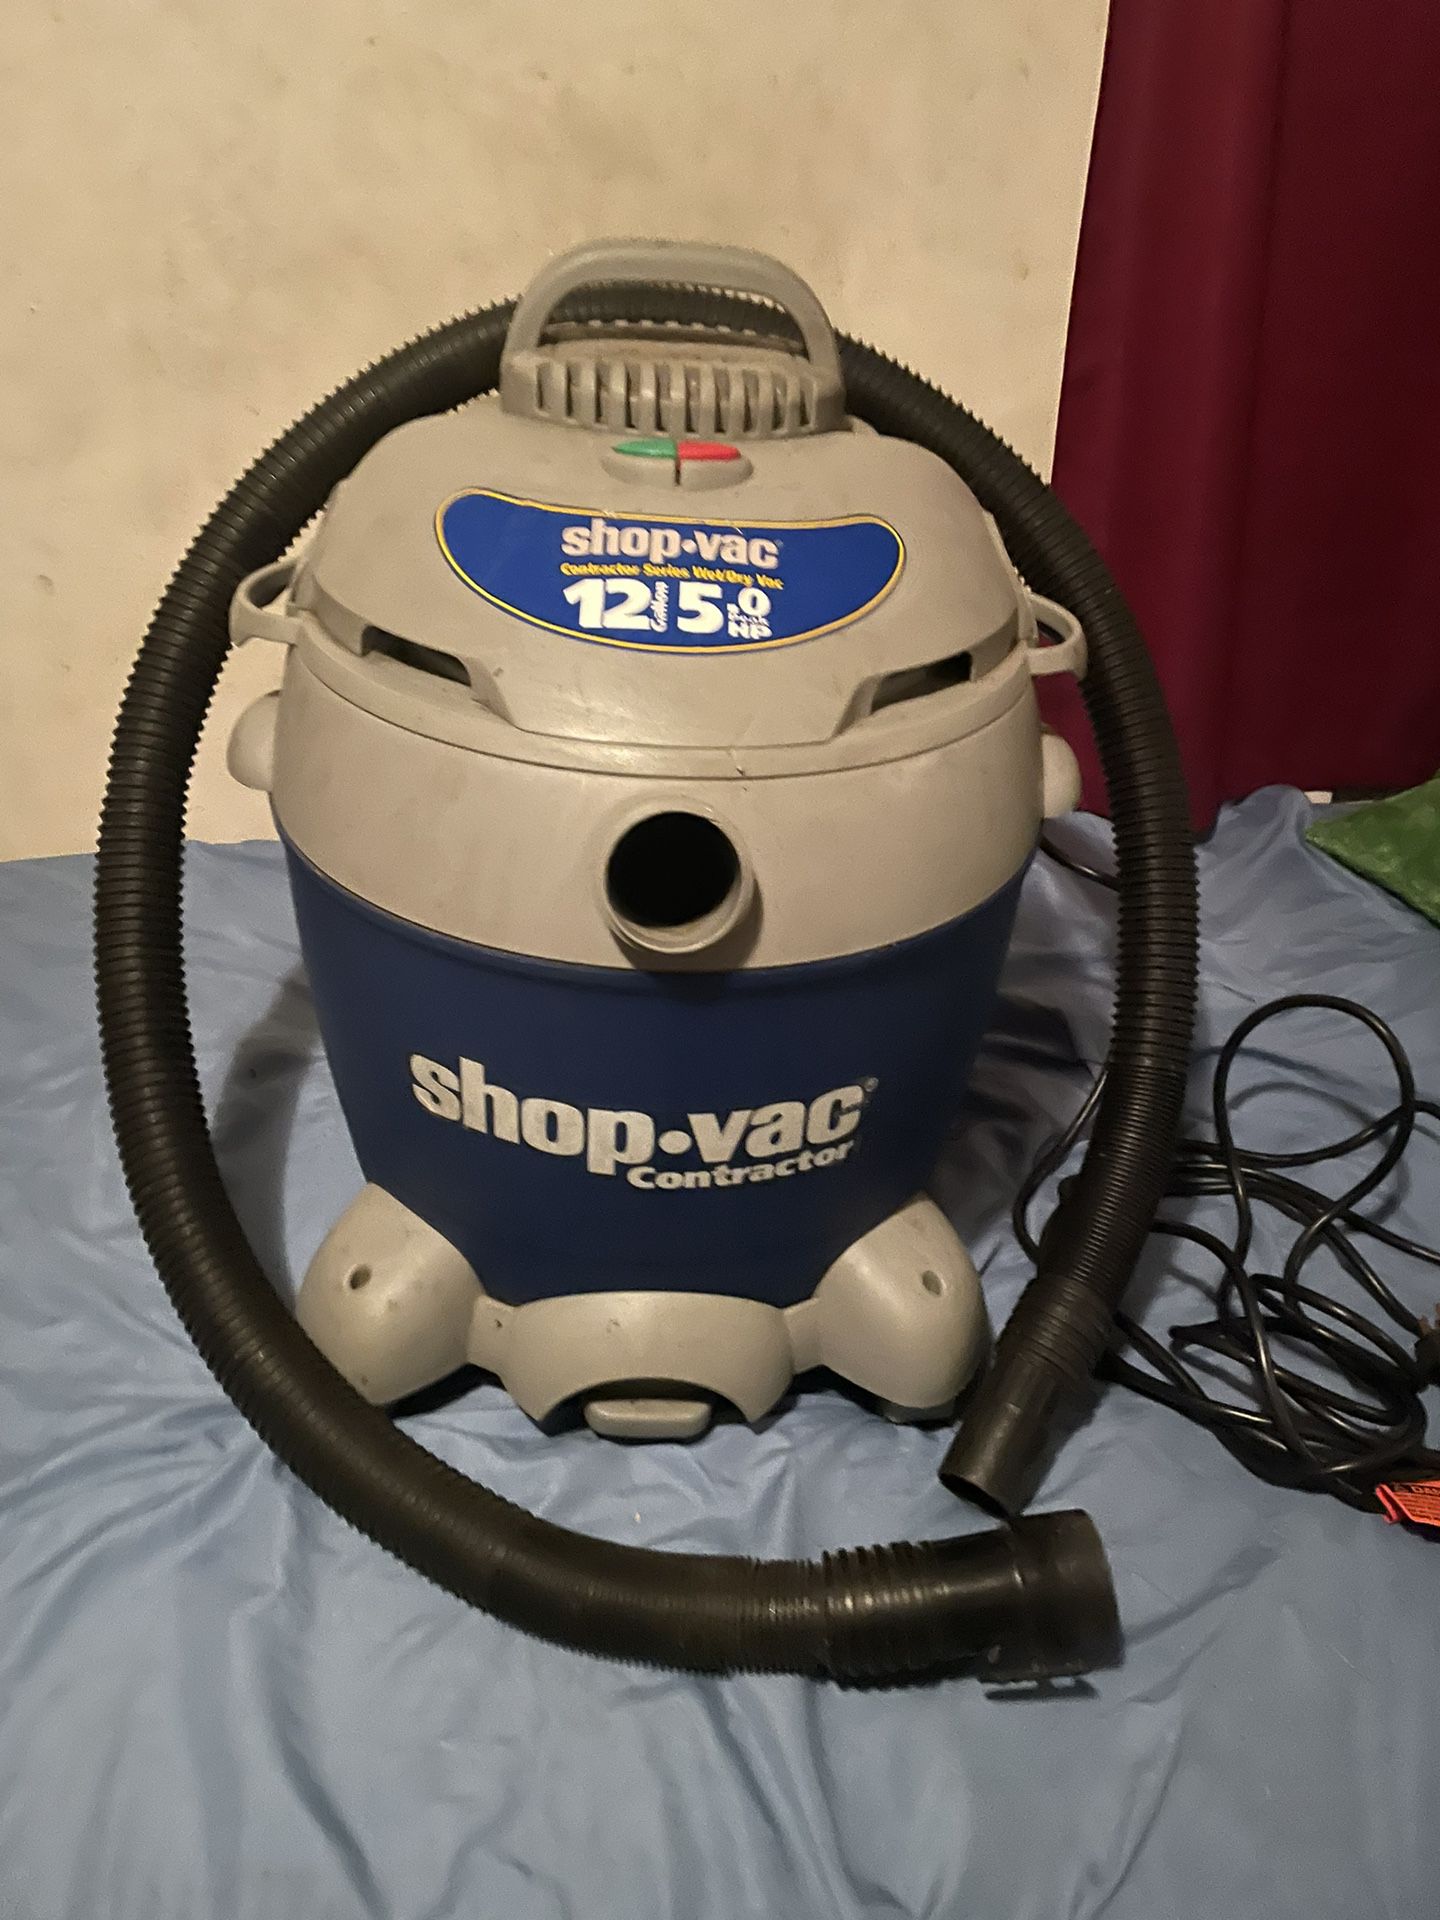 Shop Vac Contractor Vacuum 